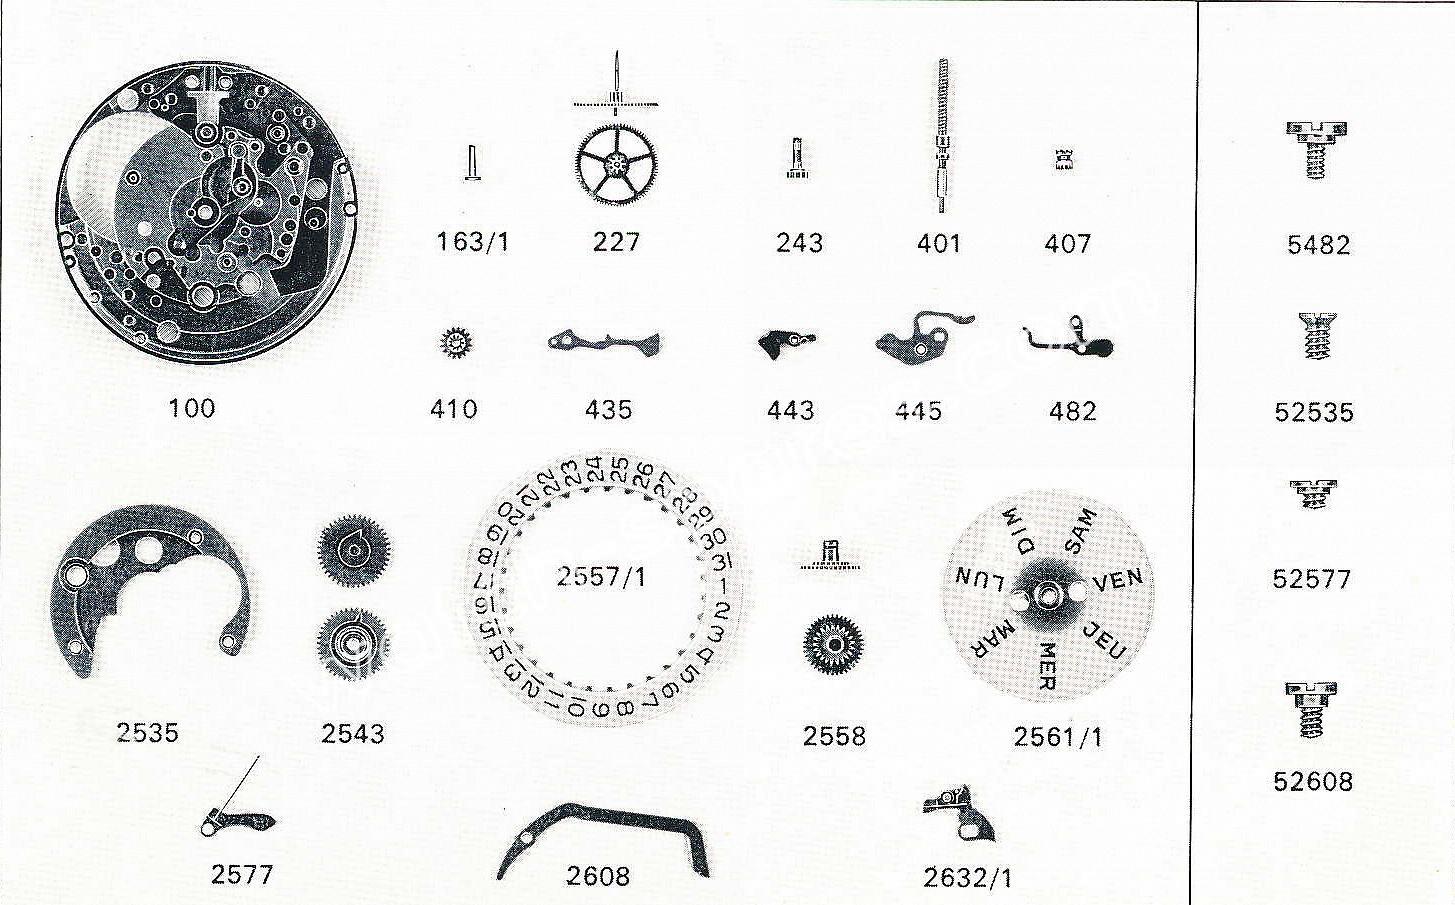 Favre leuba FL 1164 watch date parts